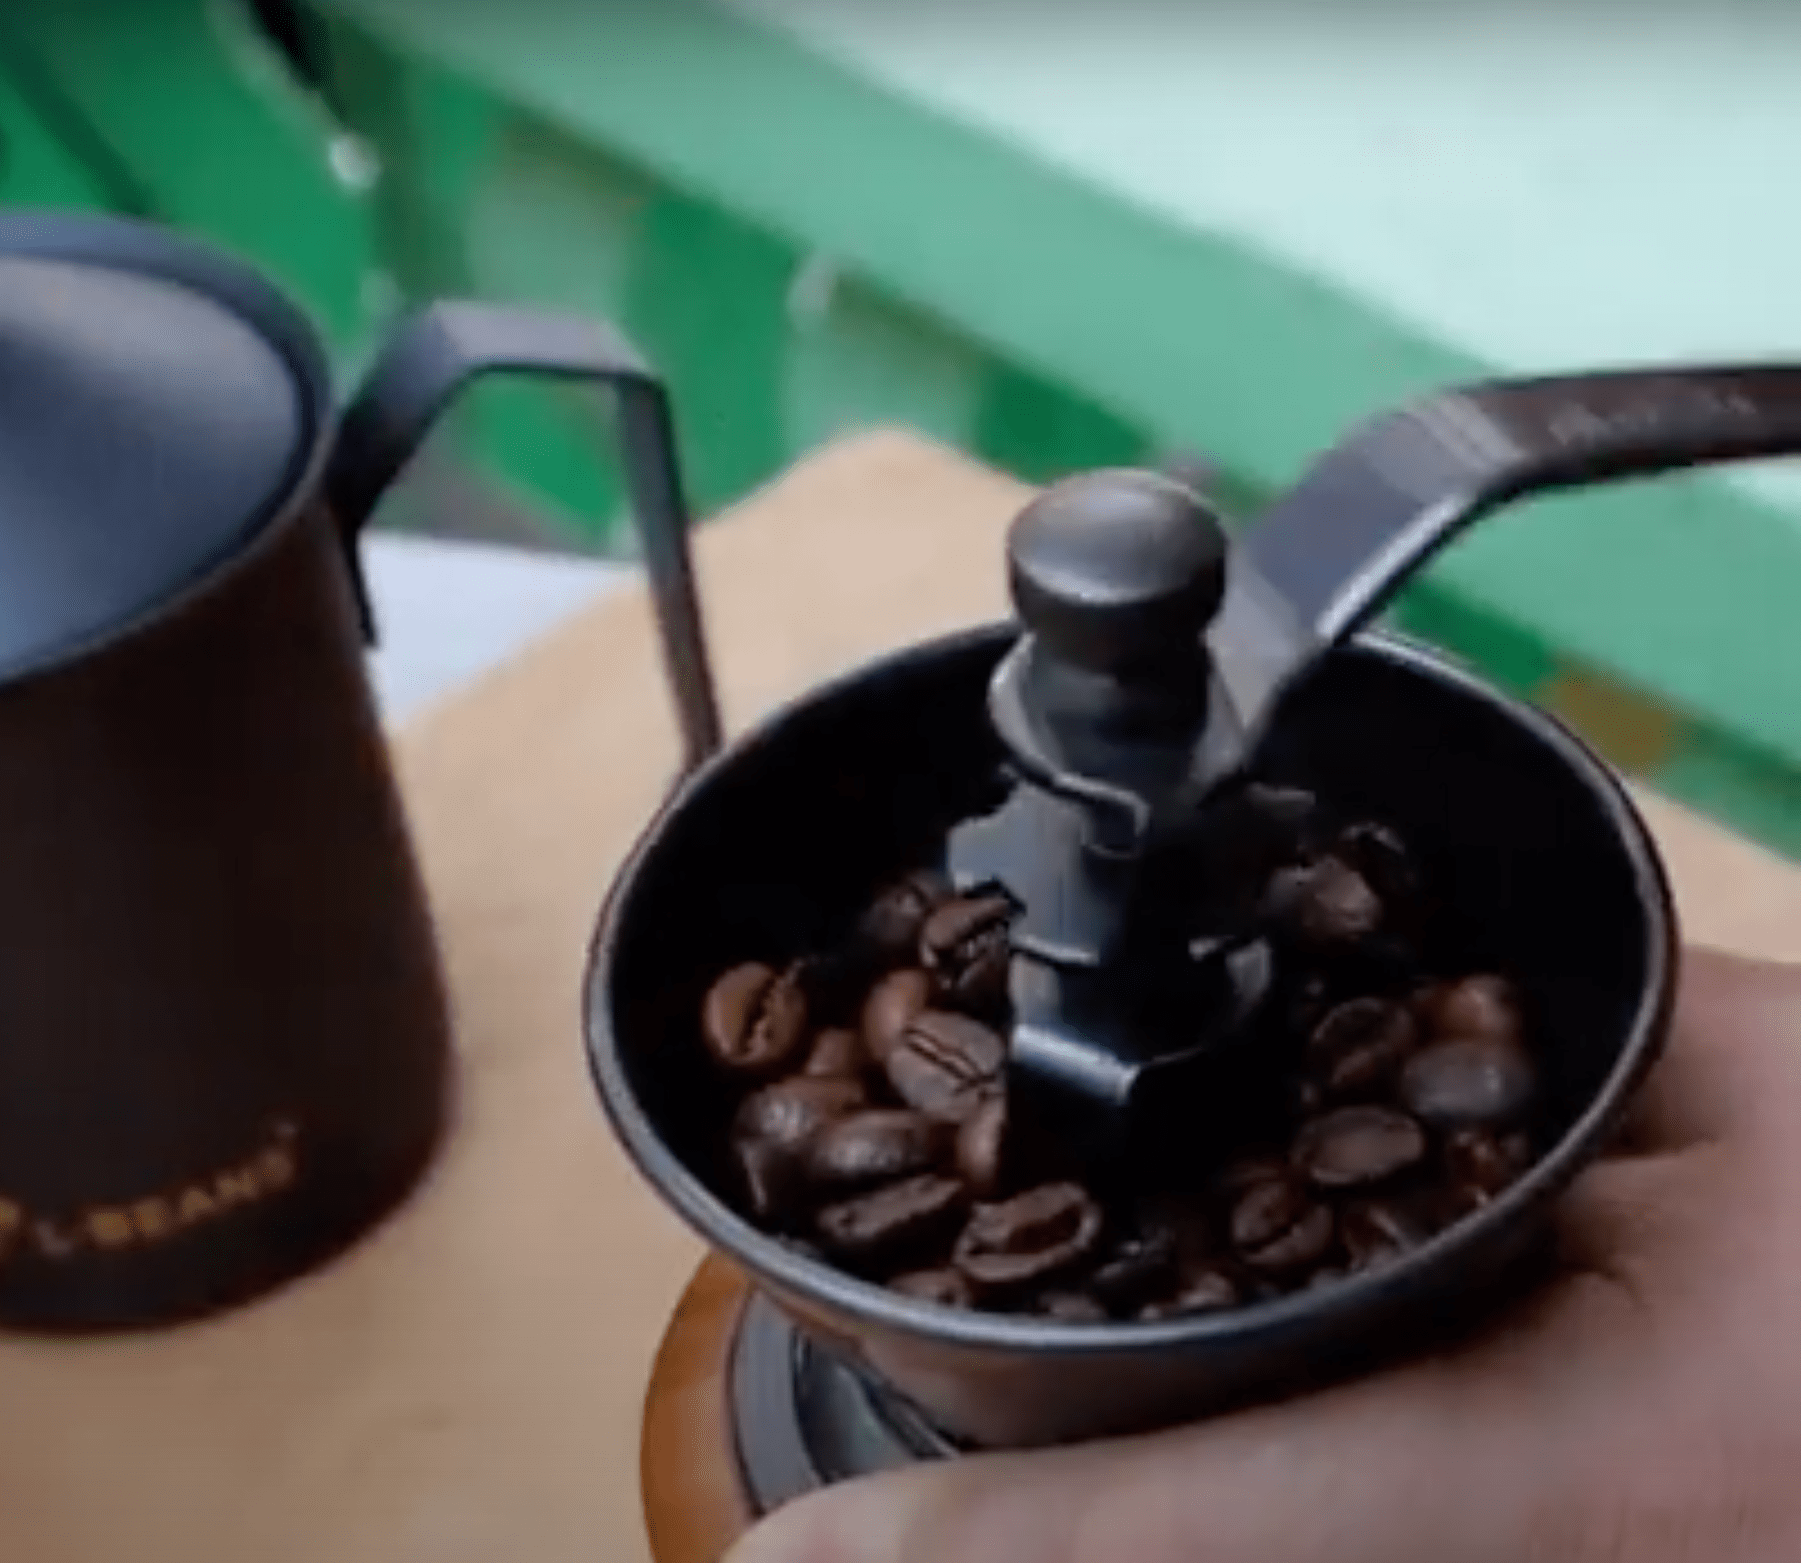 7-layered coffee - ground coffee beans